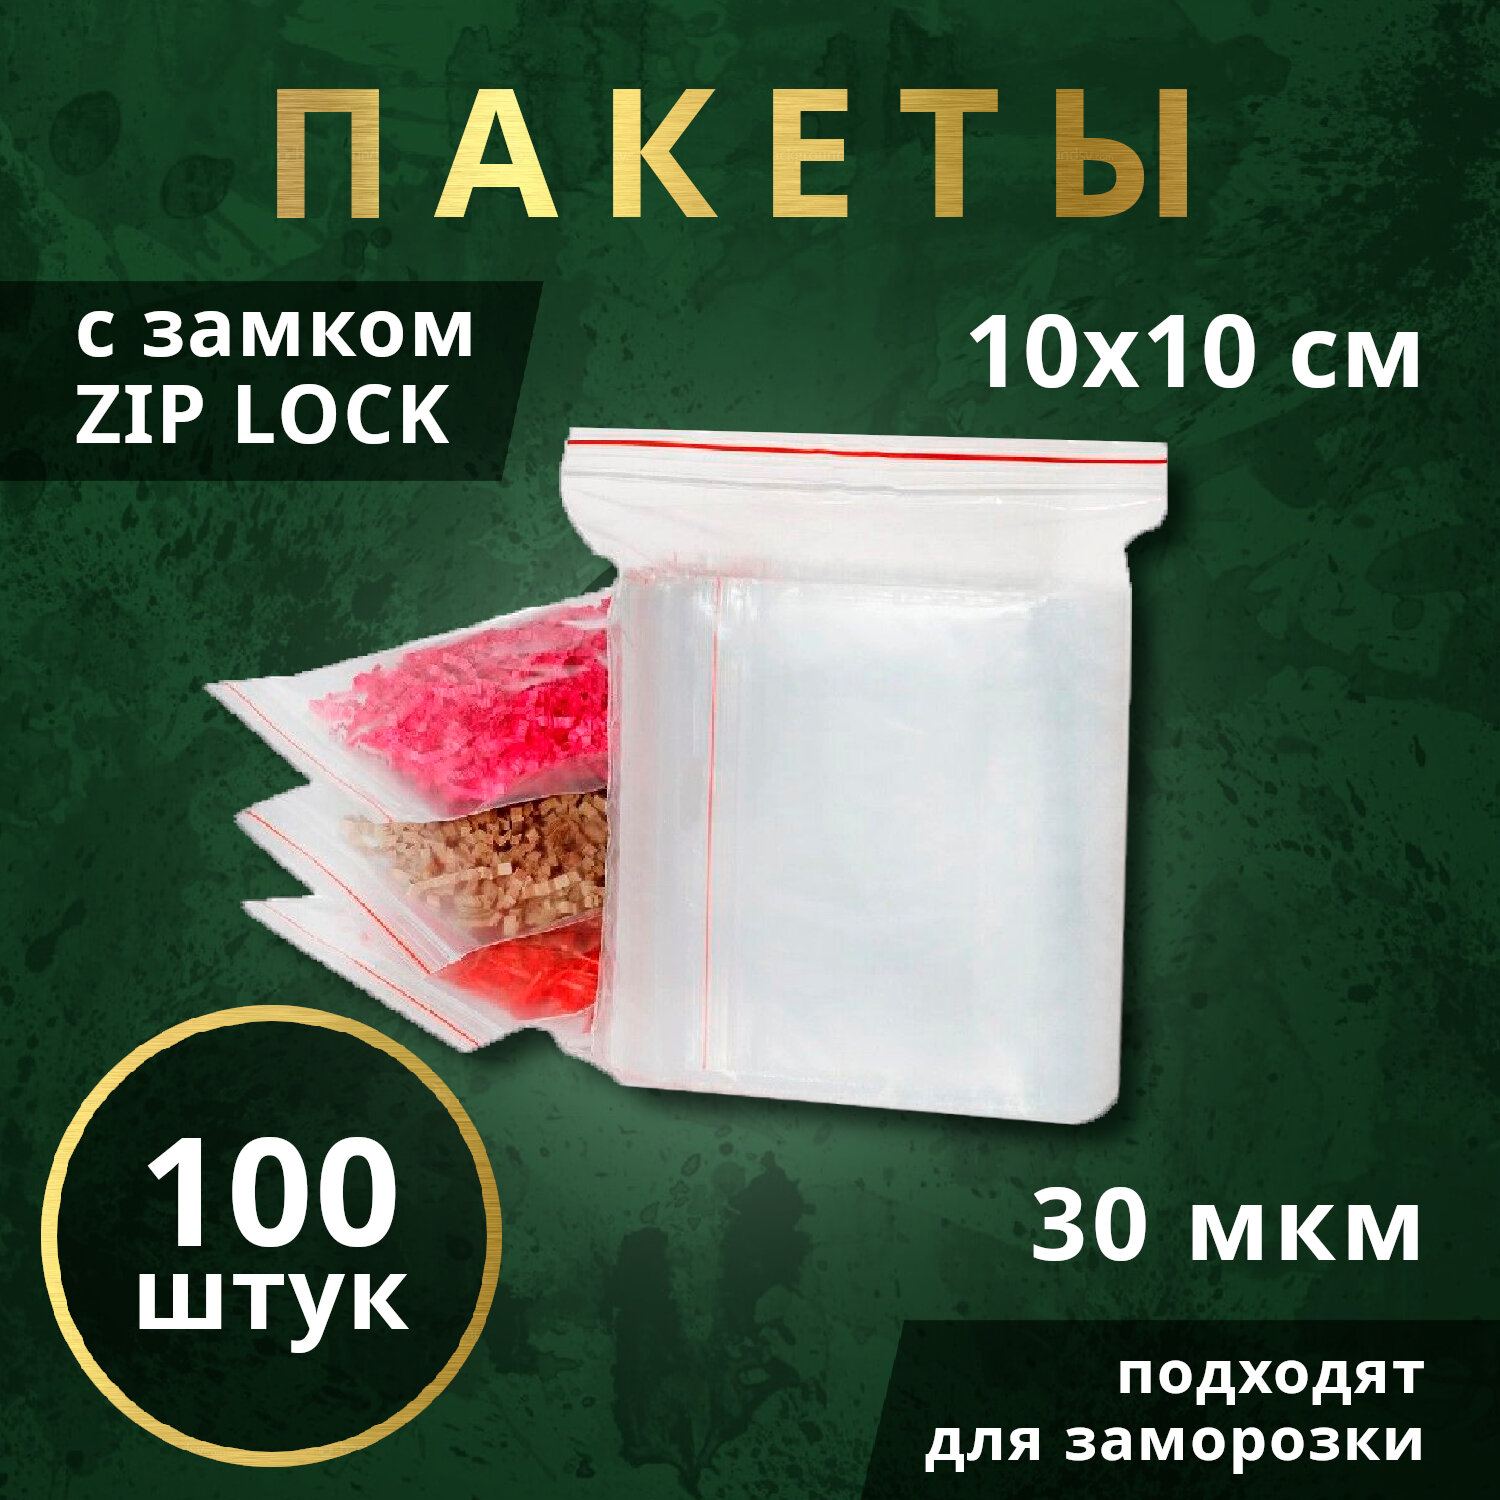 Пакеты ZIP-LOCK для заморозки продуктов 10х10см, 100 шт.